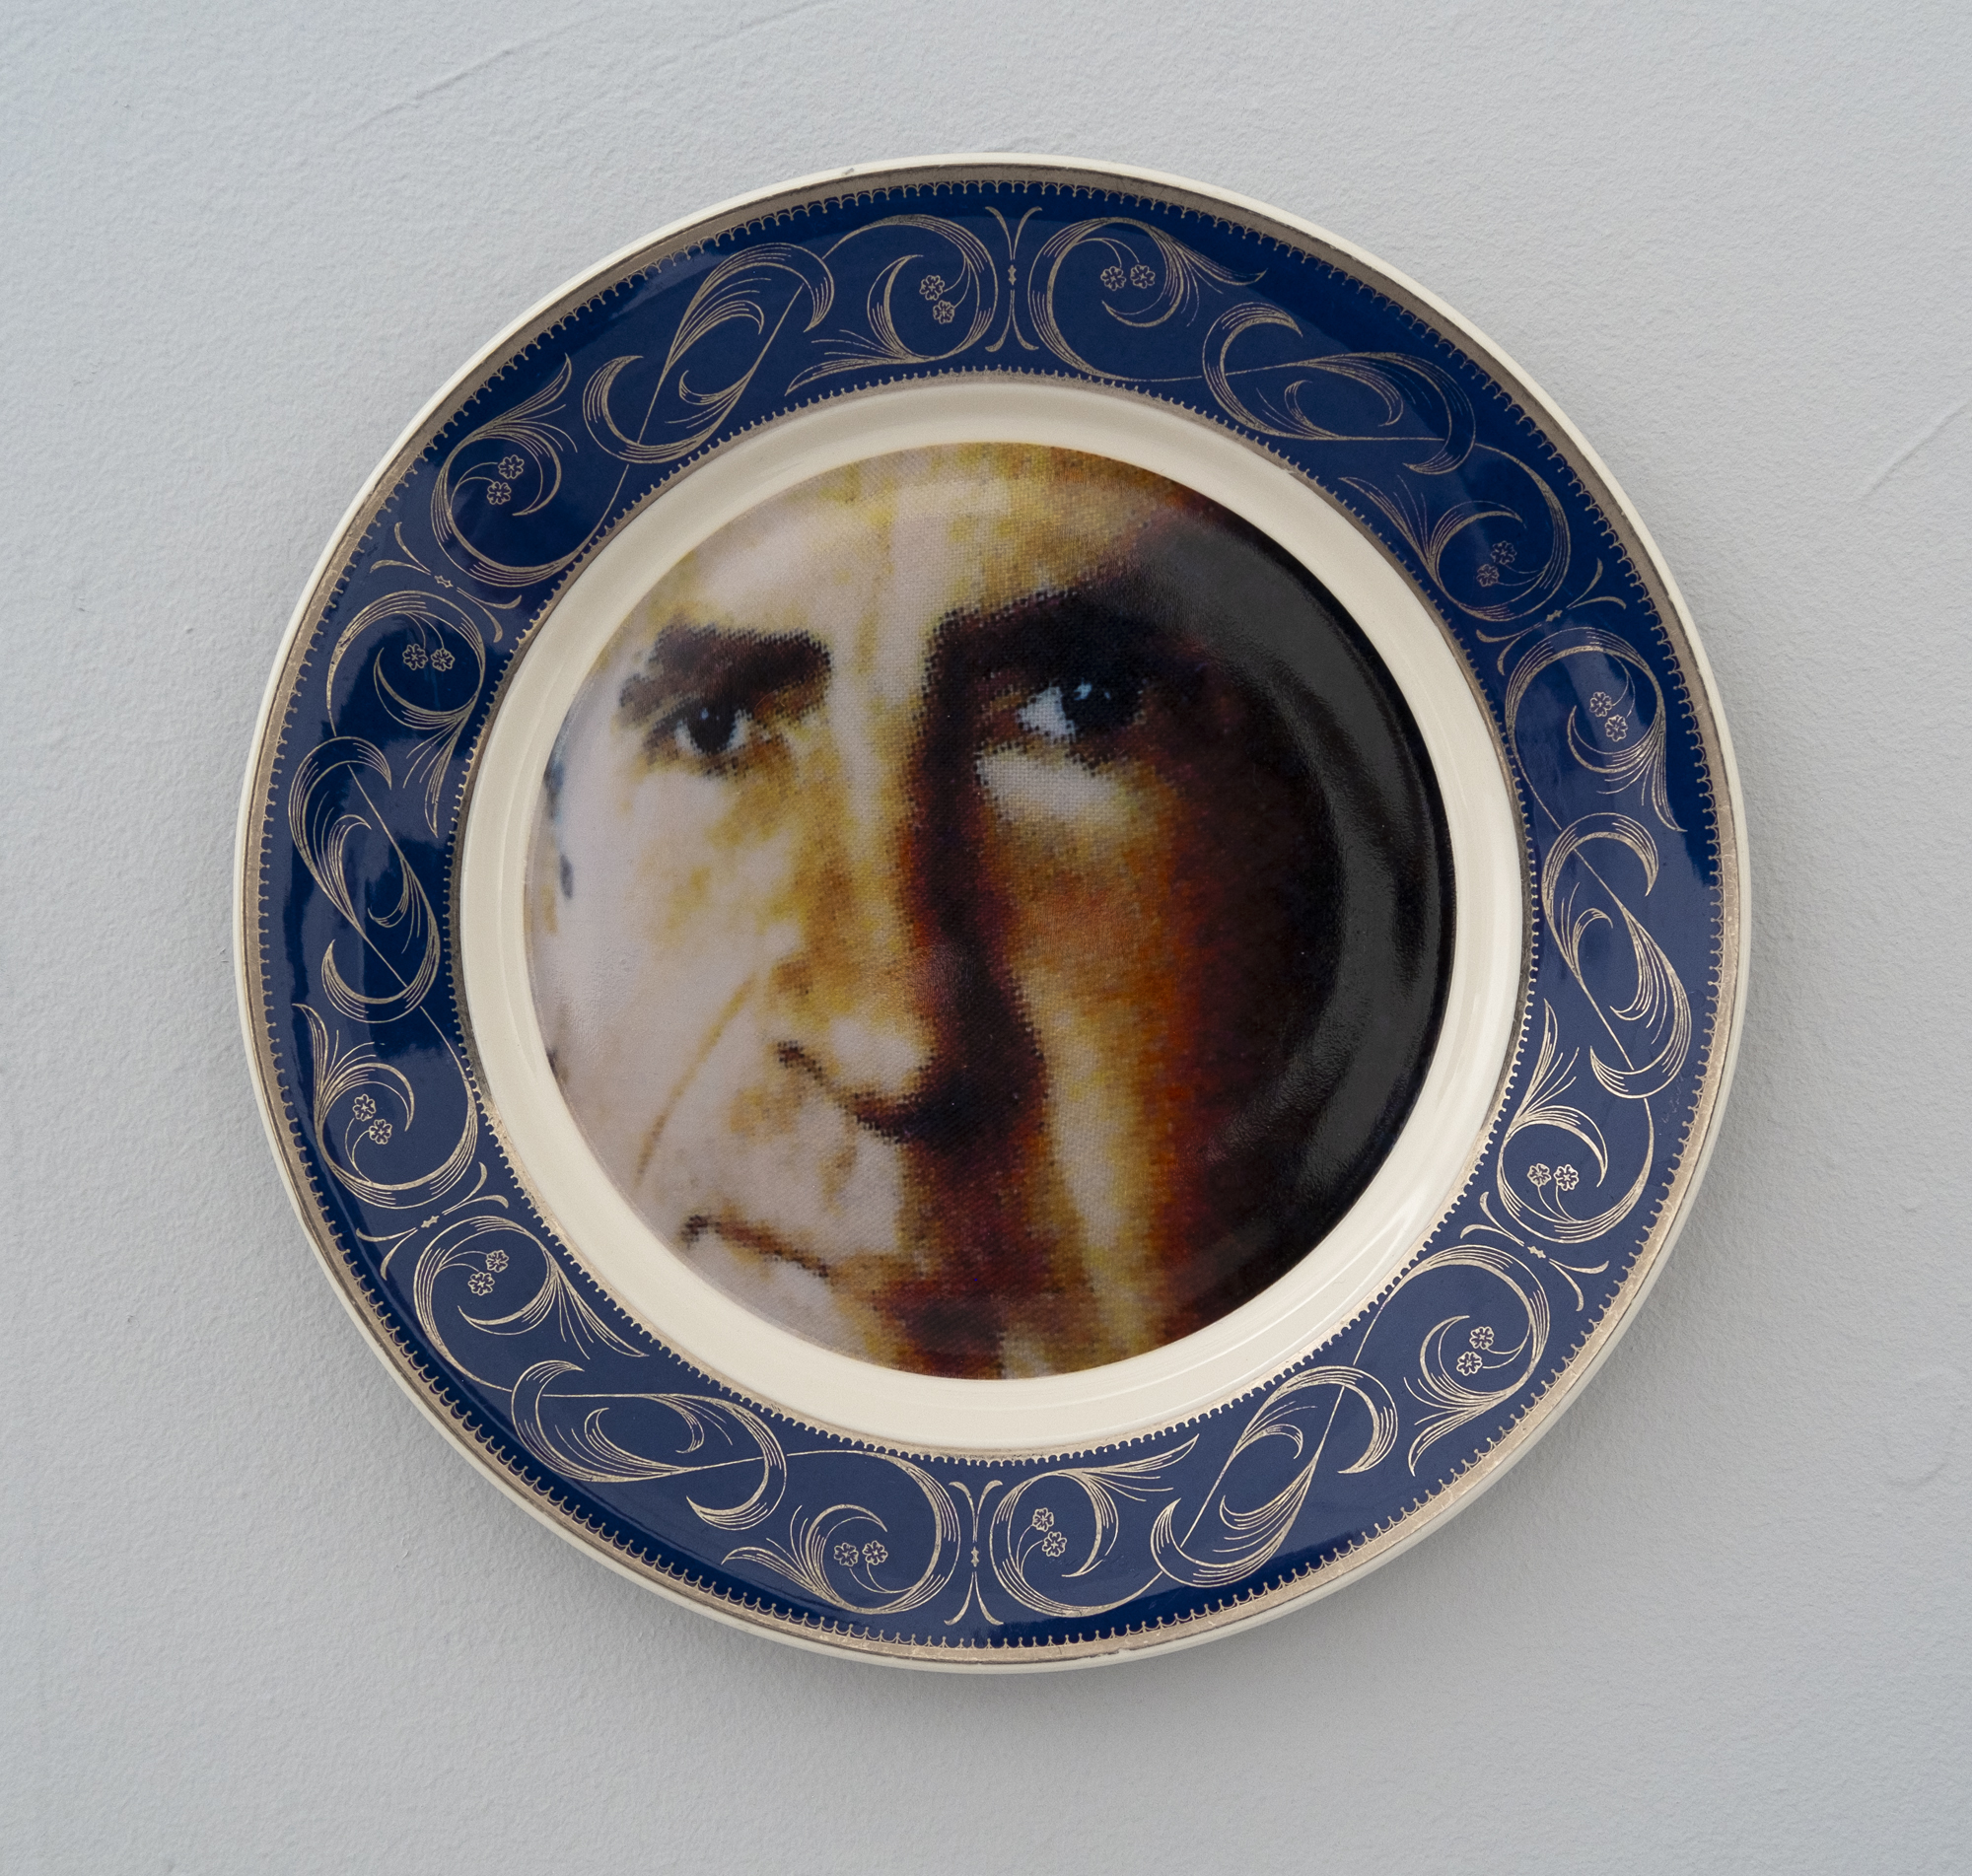  Bean Gilsdorf,  Richard Nixon , 2018, Ceramic plate, 10.25 inch diameter. 